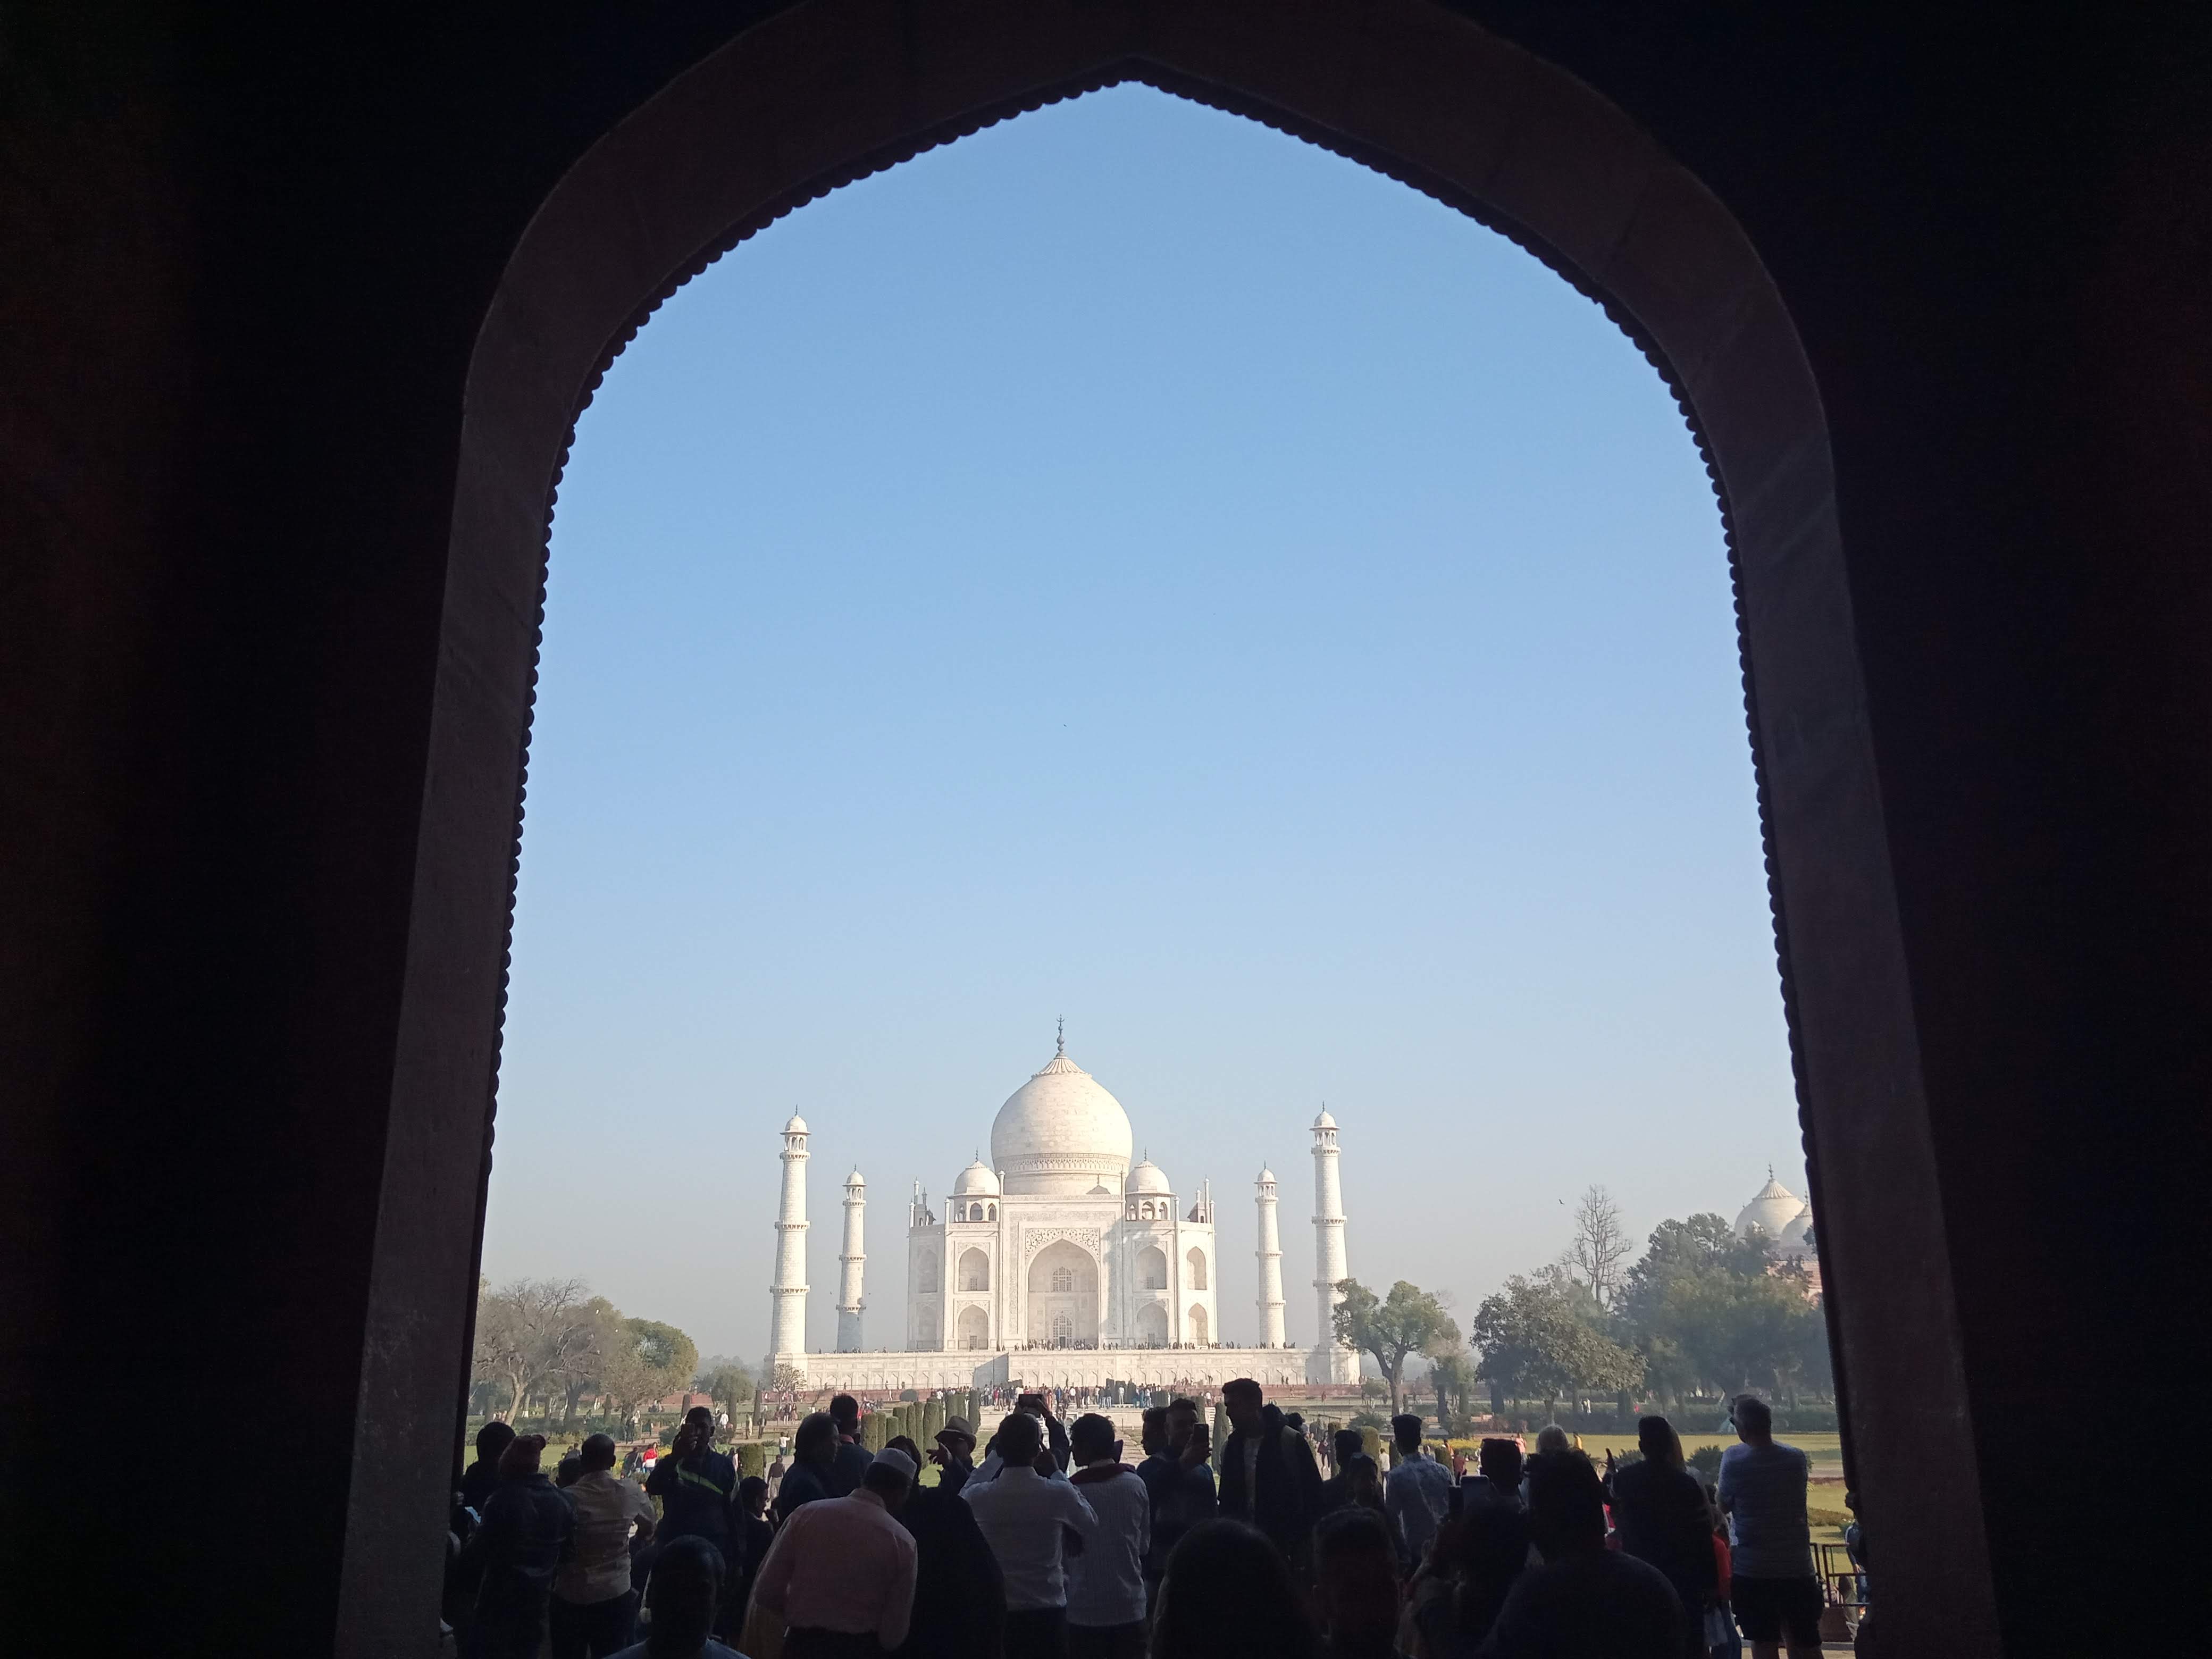 Taj Mahal of Agra